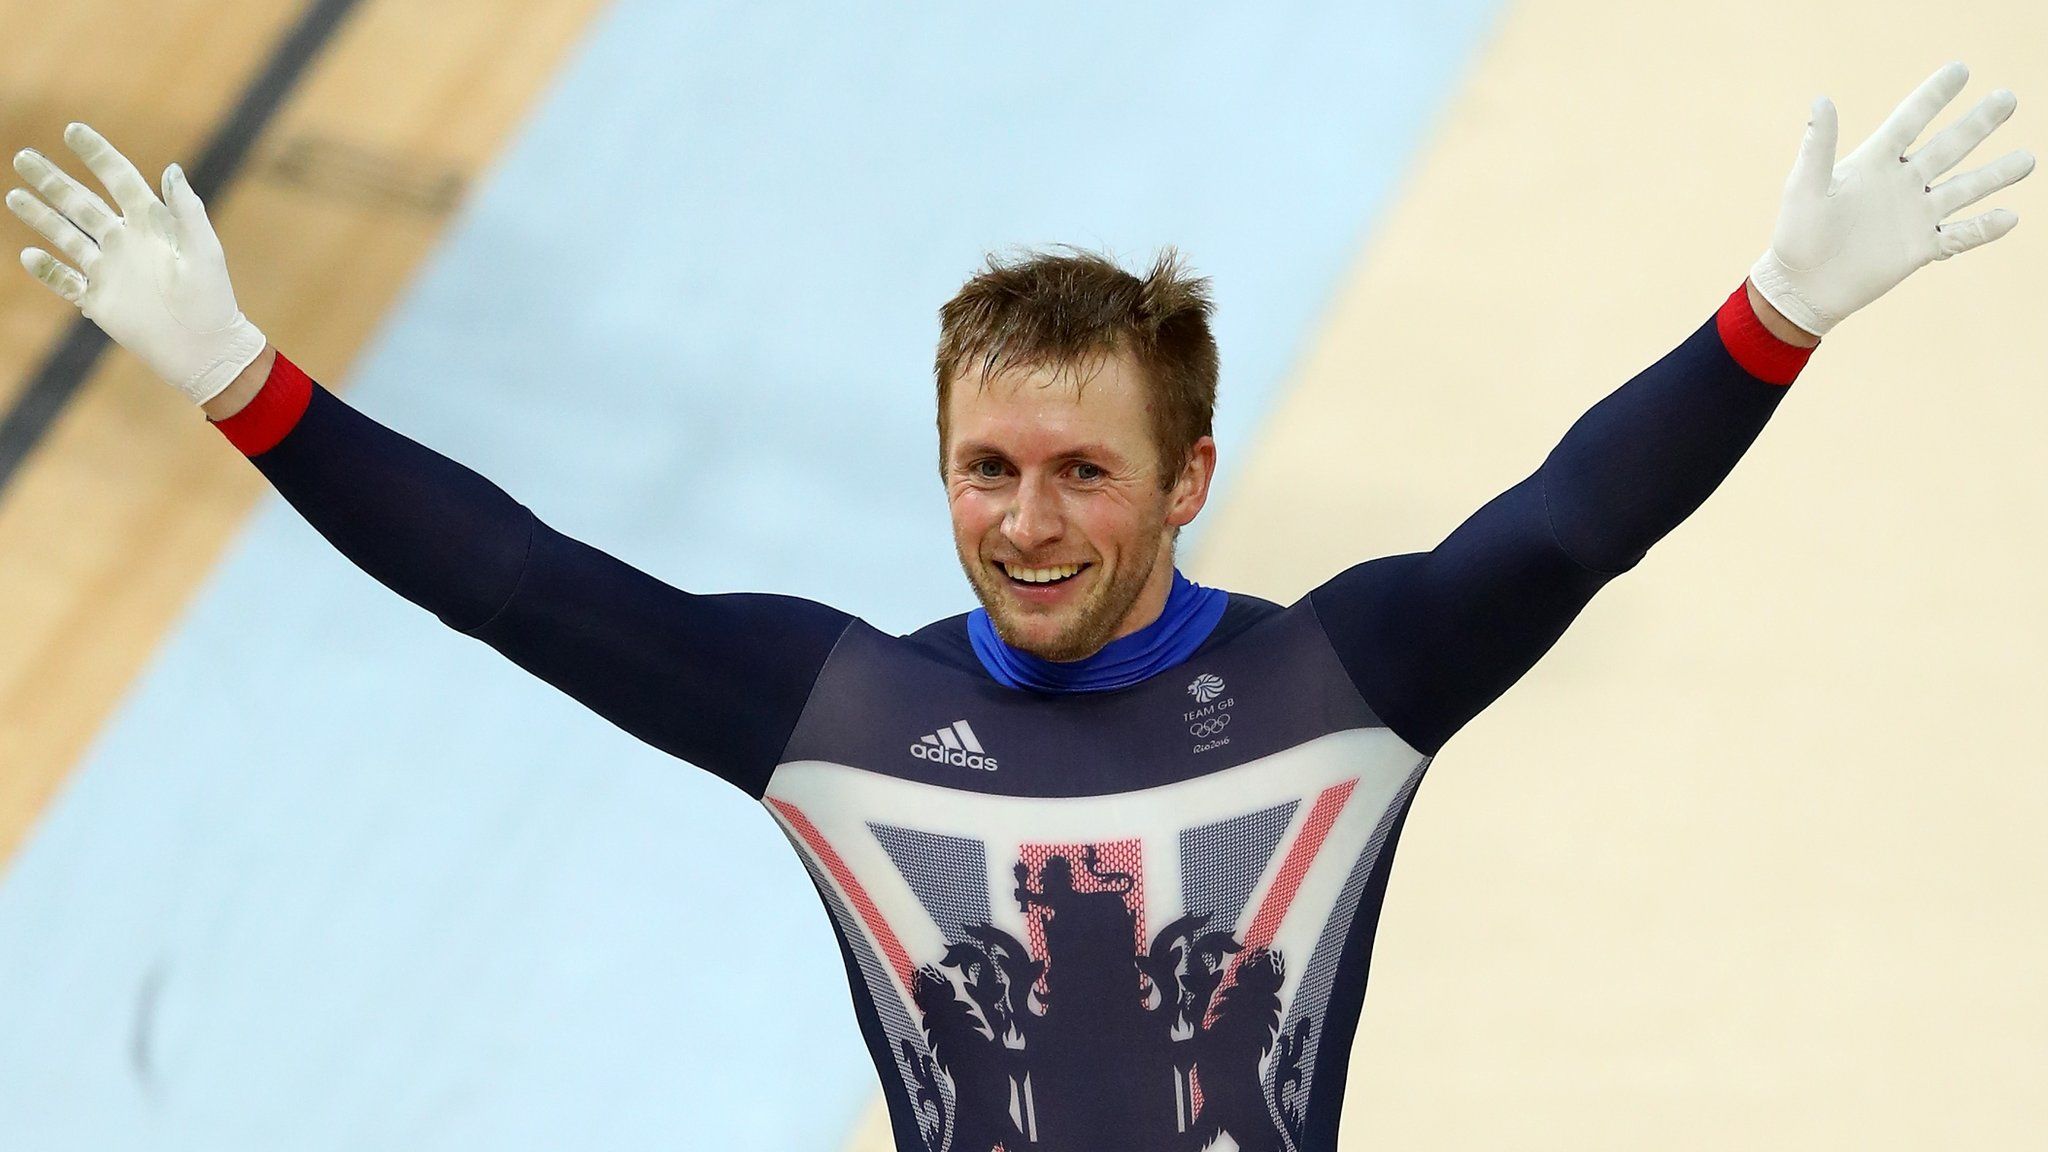 Olympic gold medal winning track cyclist Jason Kenny